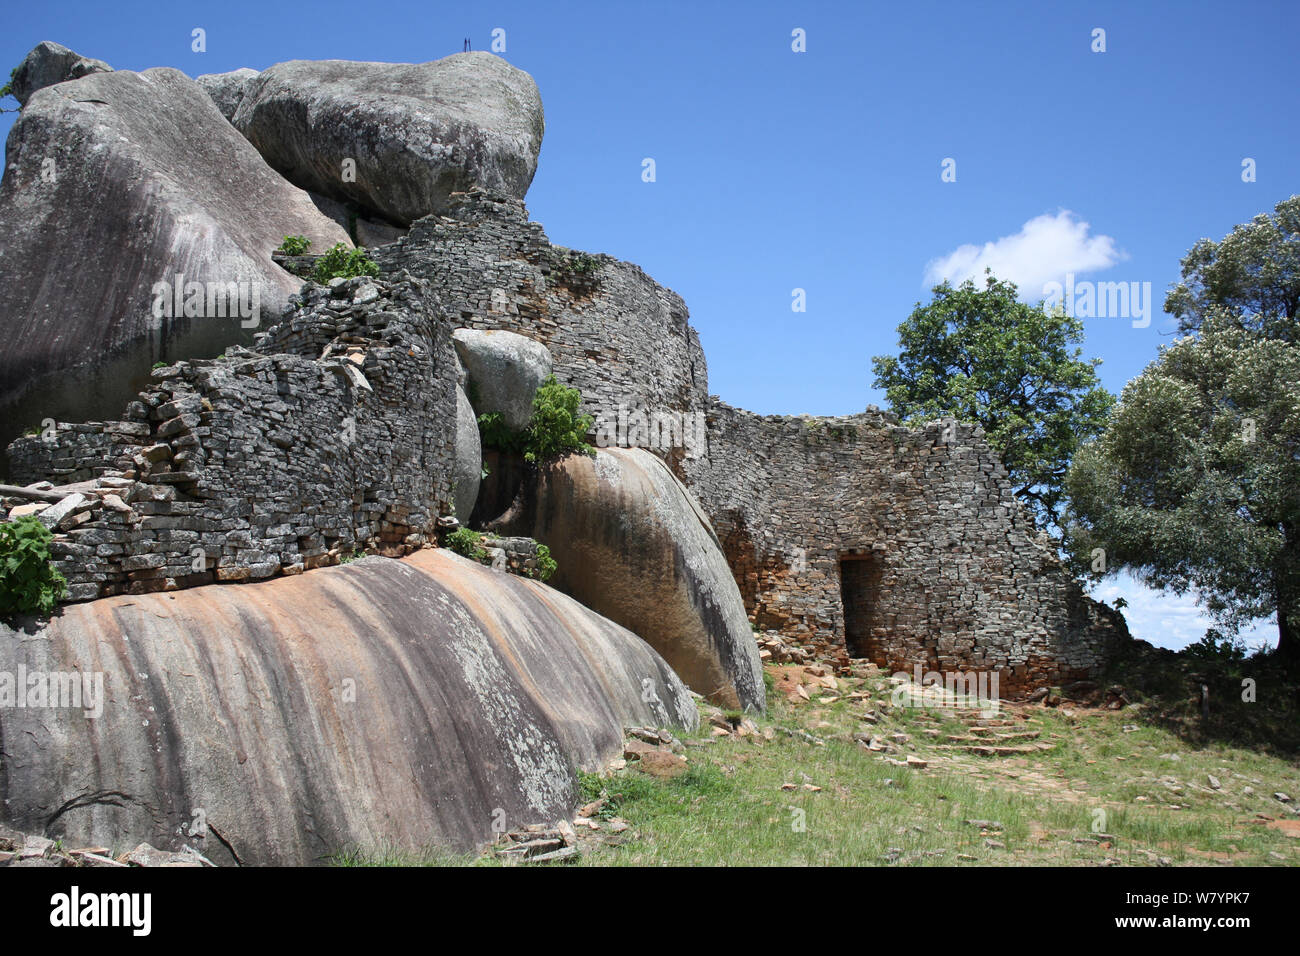 Great Zimbabwe ruins, ruins of the former capital of the Kingdom of Zimbabwe, built between 11th-15th centuary. Central Zimbabwe January 2011. Stock Photo